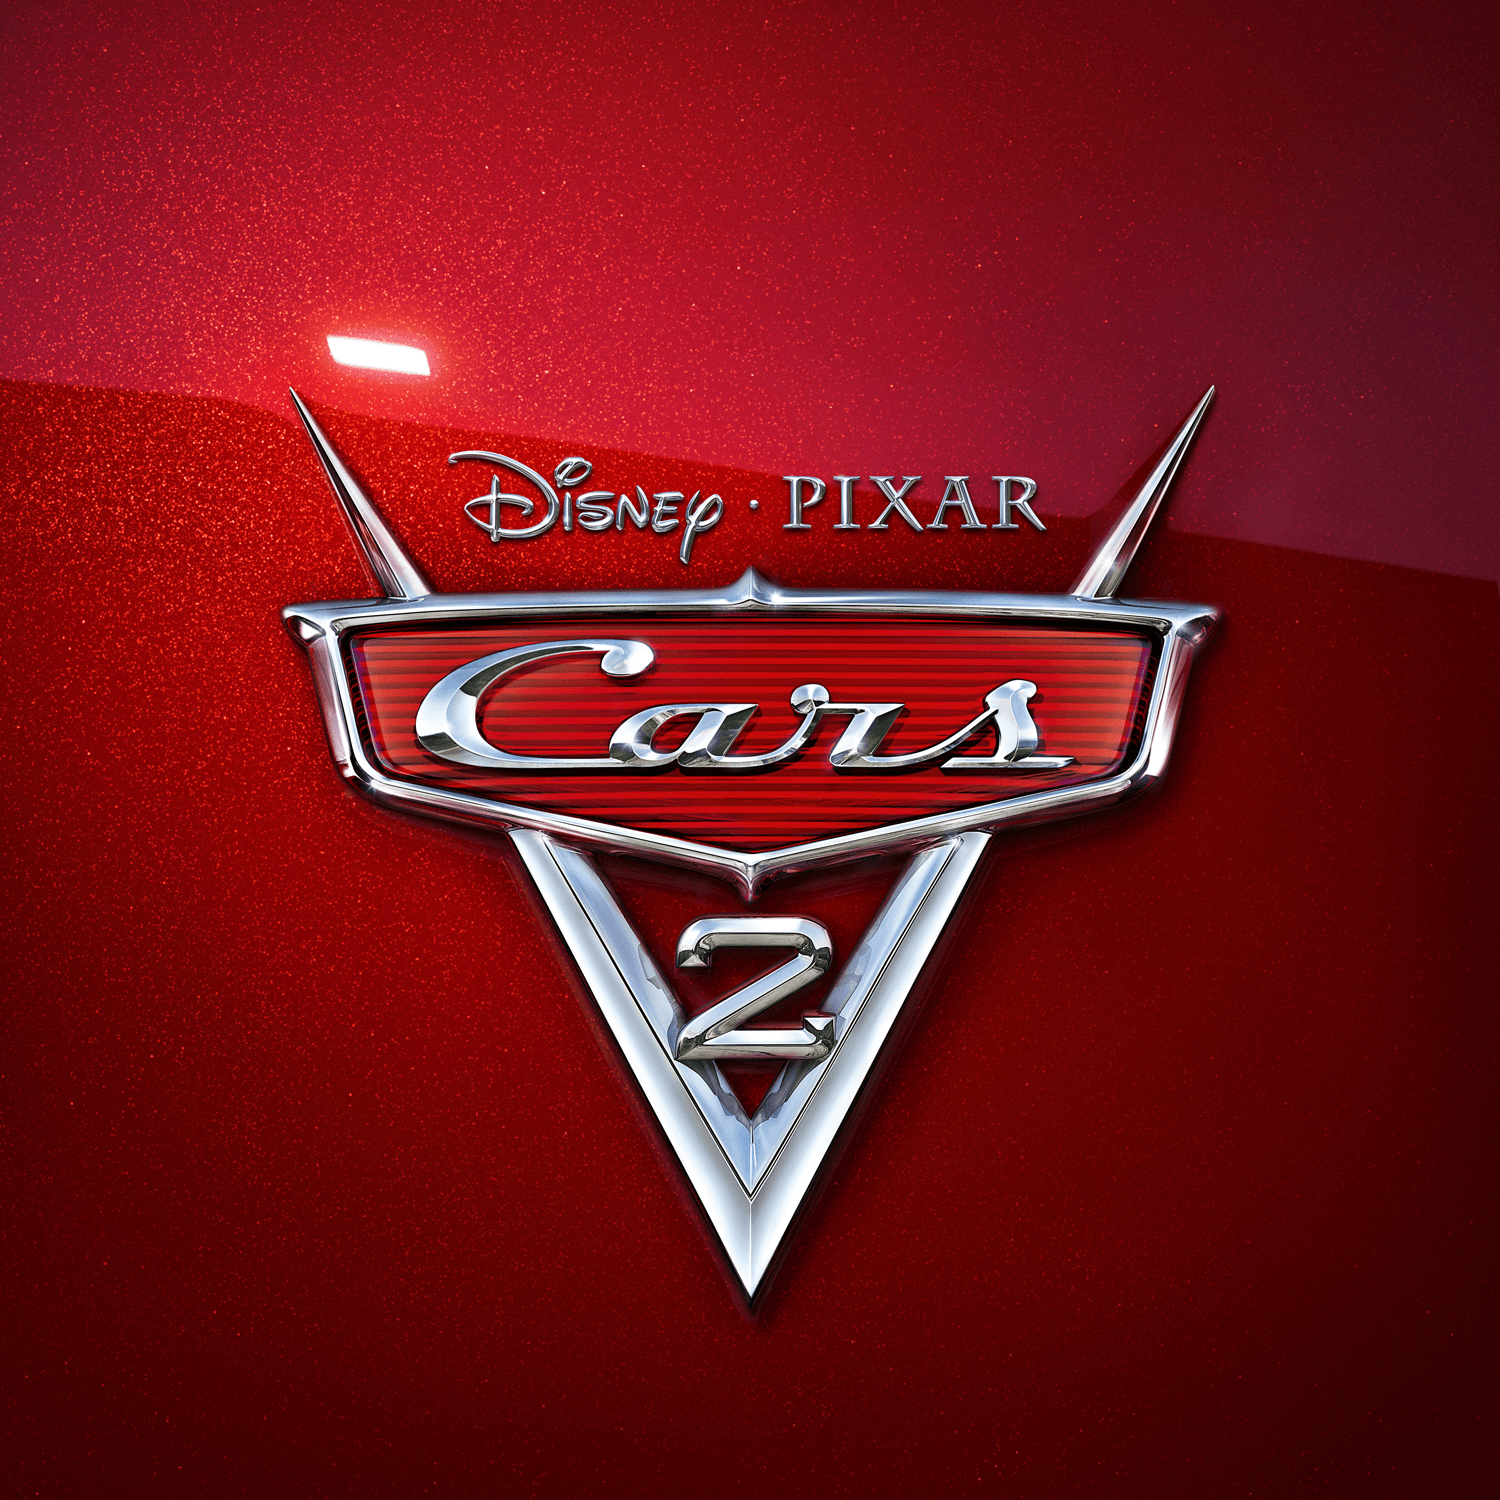 Disney Cars 2 Logo - Cars 2 Updated Logo